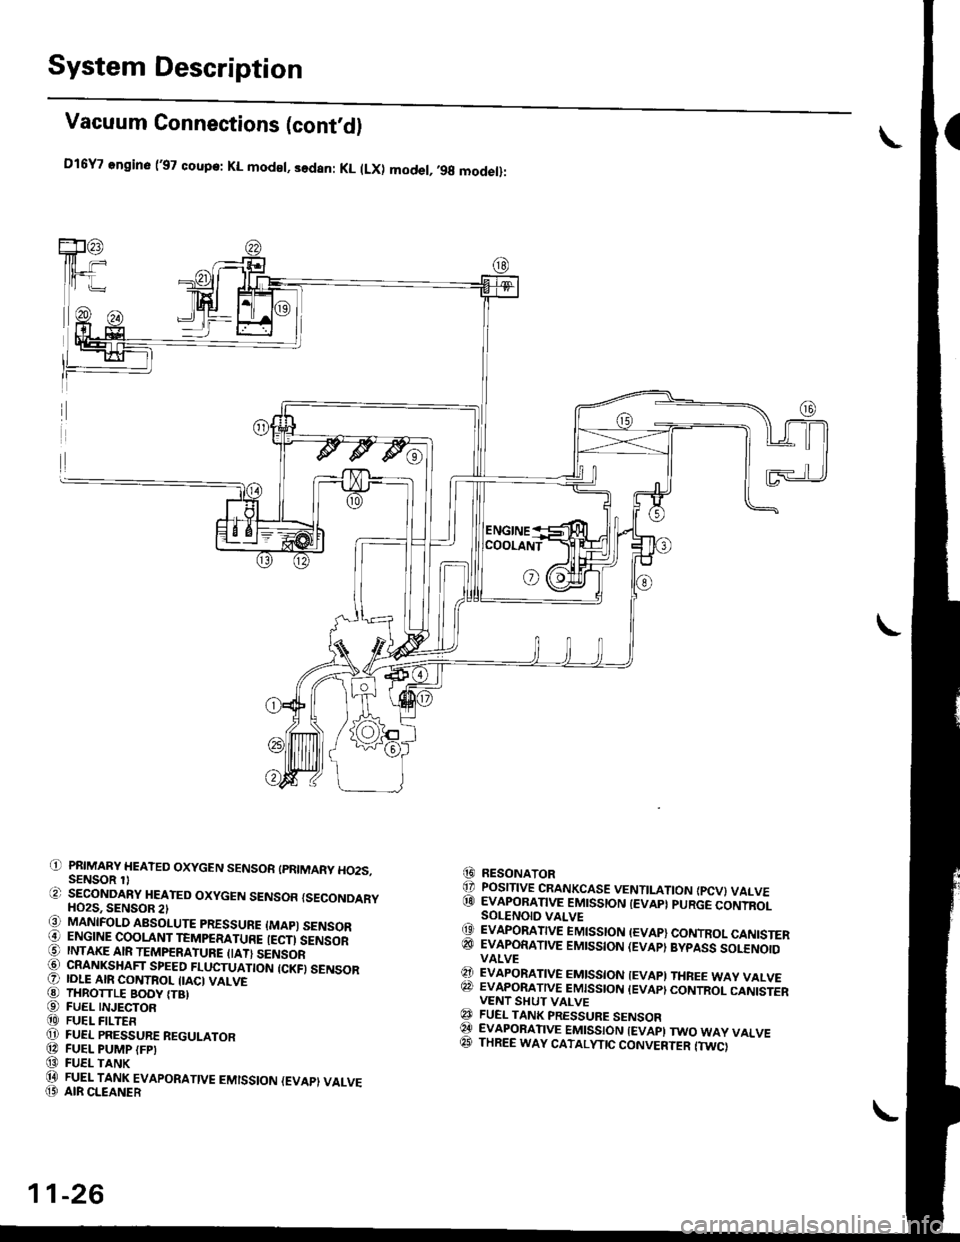 HONDA CIVIC 1999 6.G Workshop Manual System Description
Vacuum Connections (contd)
Dl6Y7 angin6 (97 coup.: KL mod€l, sedan: KL (LX) model,,9g modet):
i1] PRIMARY HEATED OXYGEN SENSOR (PRIMARY HO2S,SENSOR 1)E) SECONDARY HEATED OXYGEN 